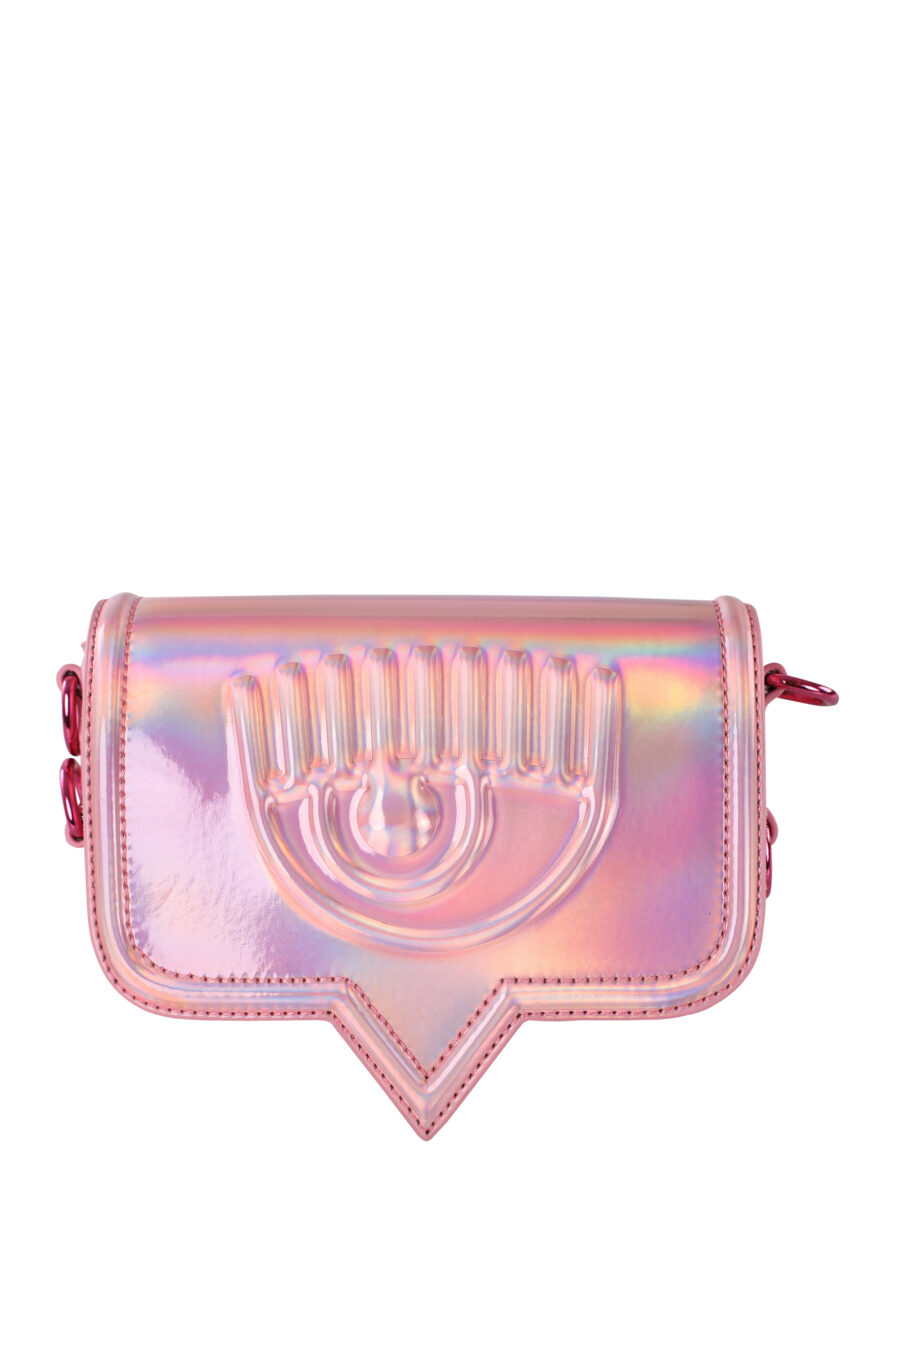 Pink shoulder bag with monochrome eye logo - IMG 5960